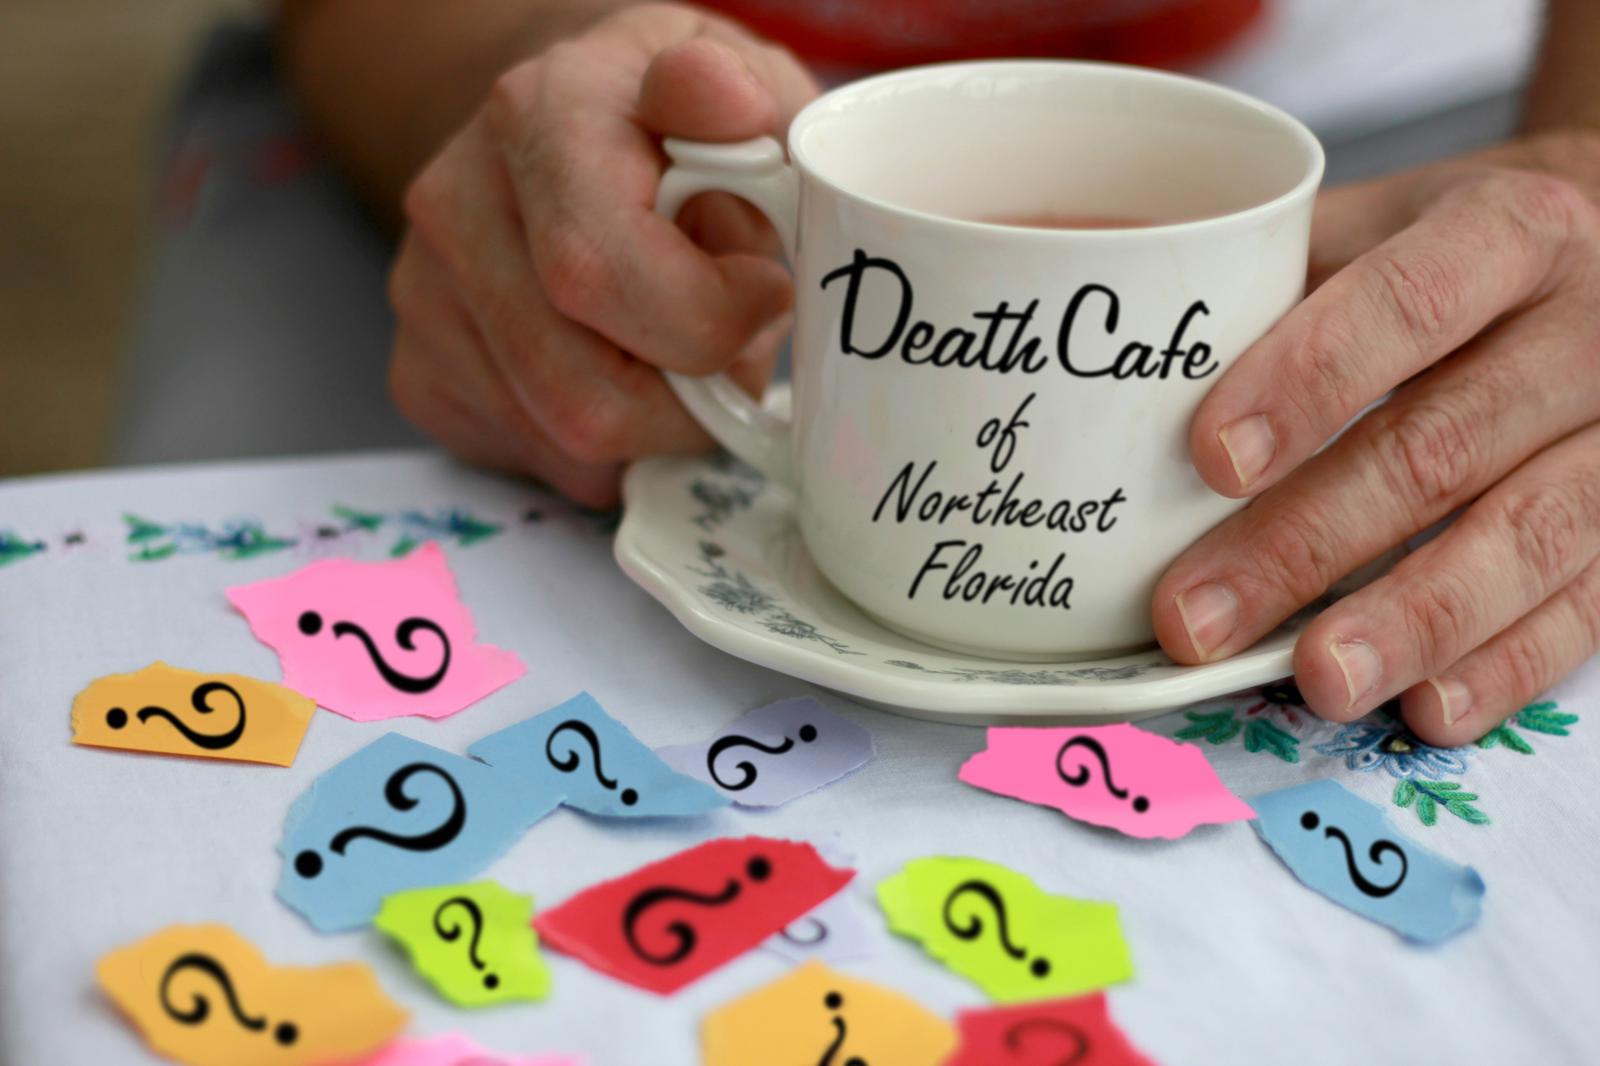 Death Cafe Northeast Florida  EST- VIRTUAL MEETING